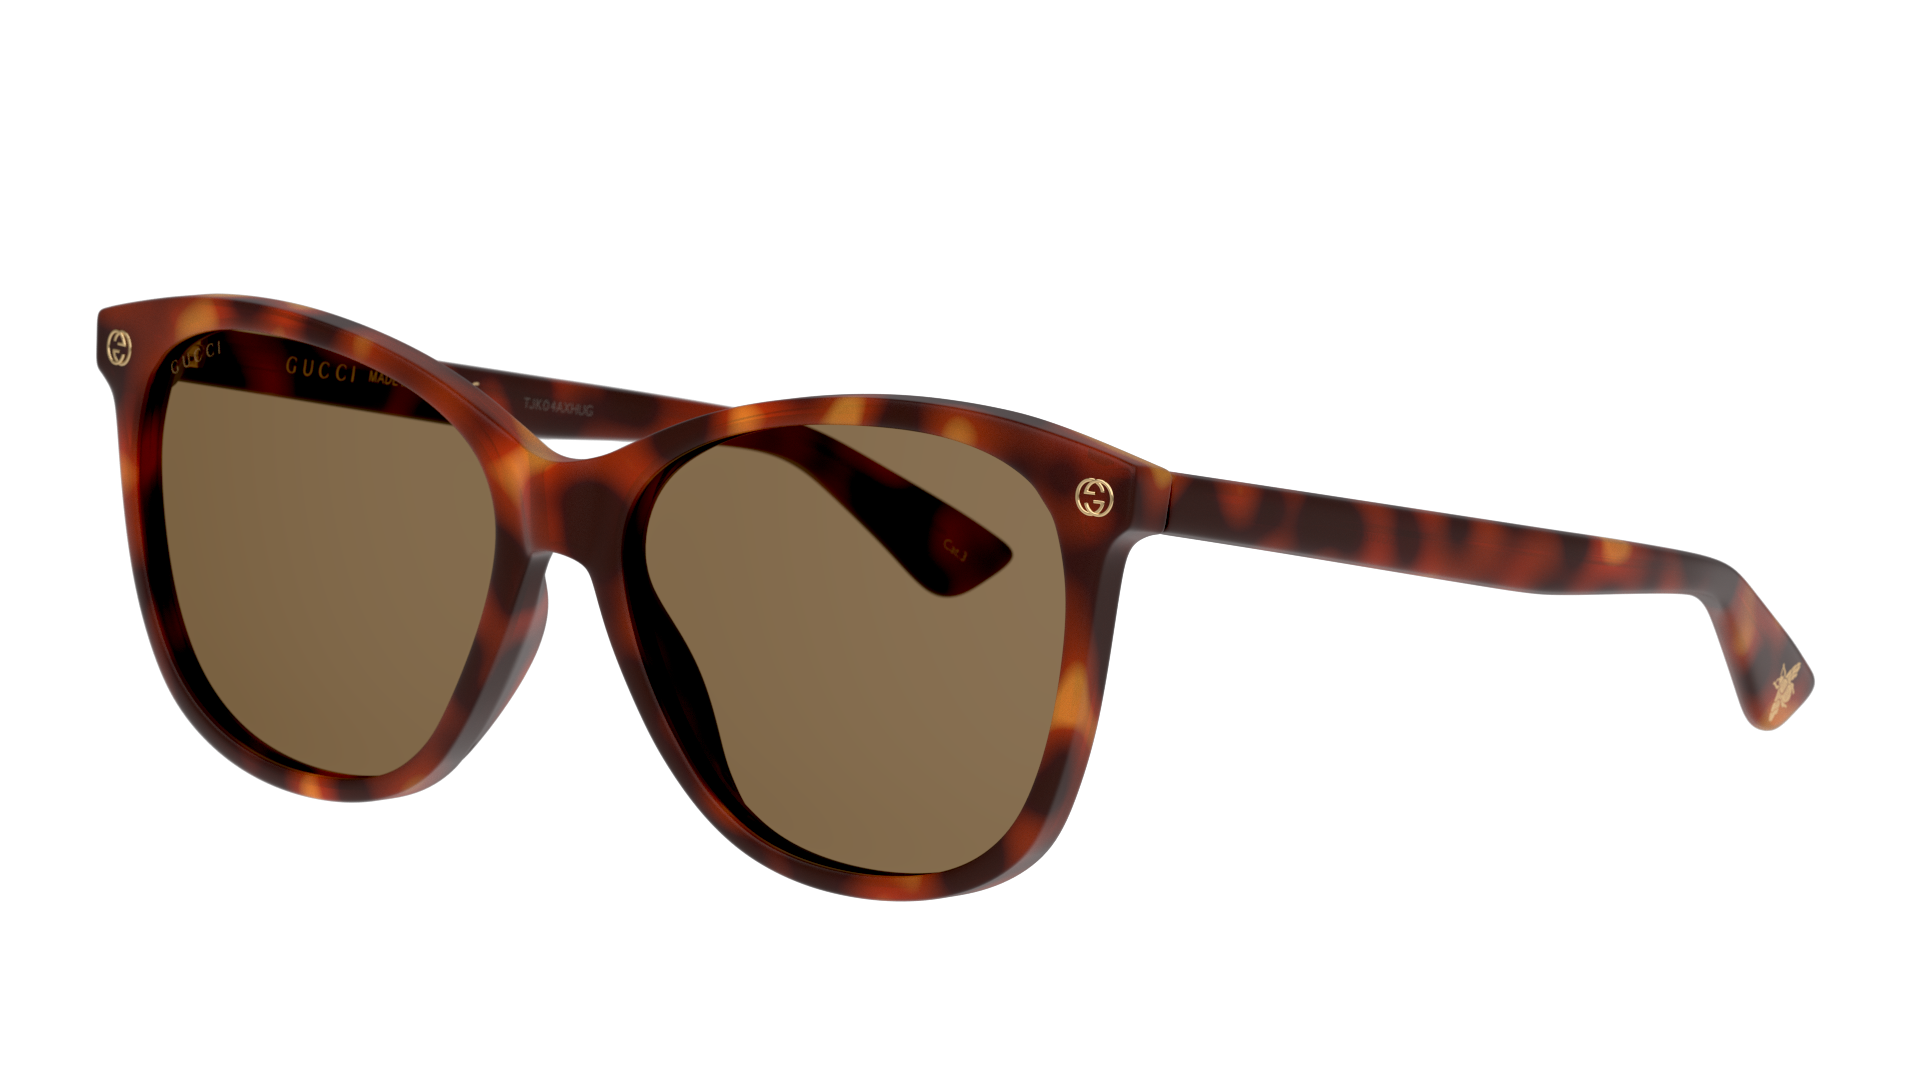 Angle_Left01 Gucci GG 0024S (002) Sunglasses Brown / Tortoise Shell